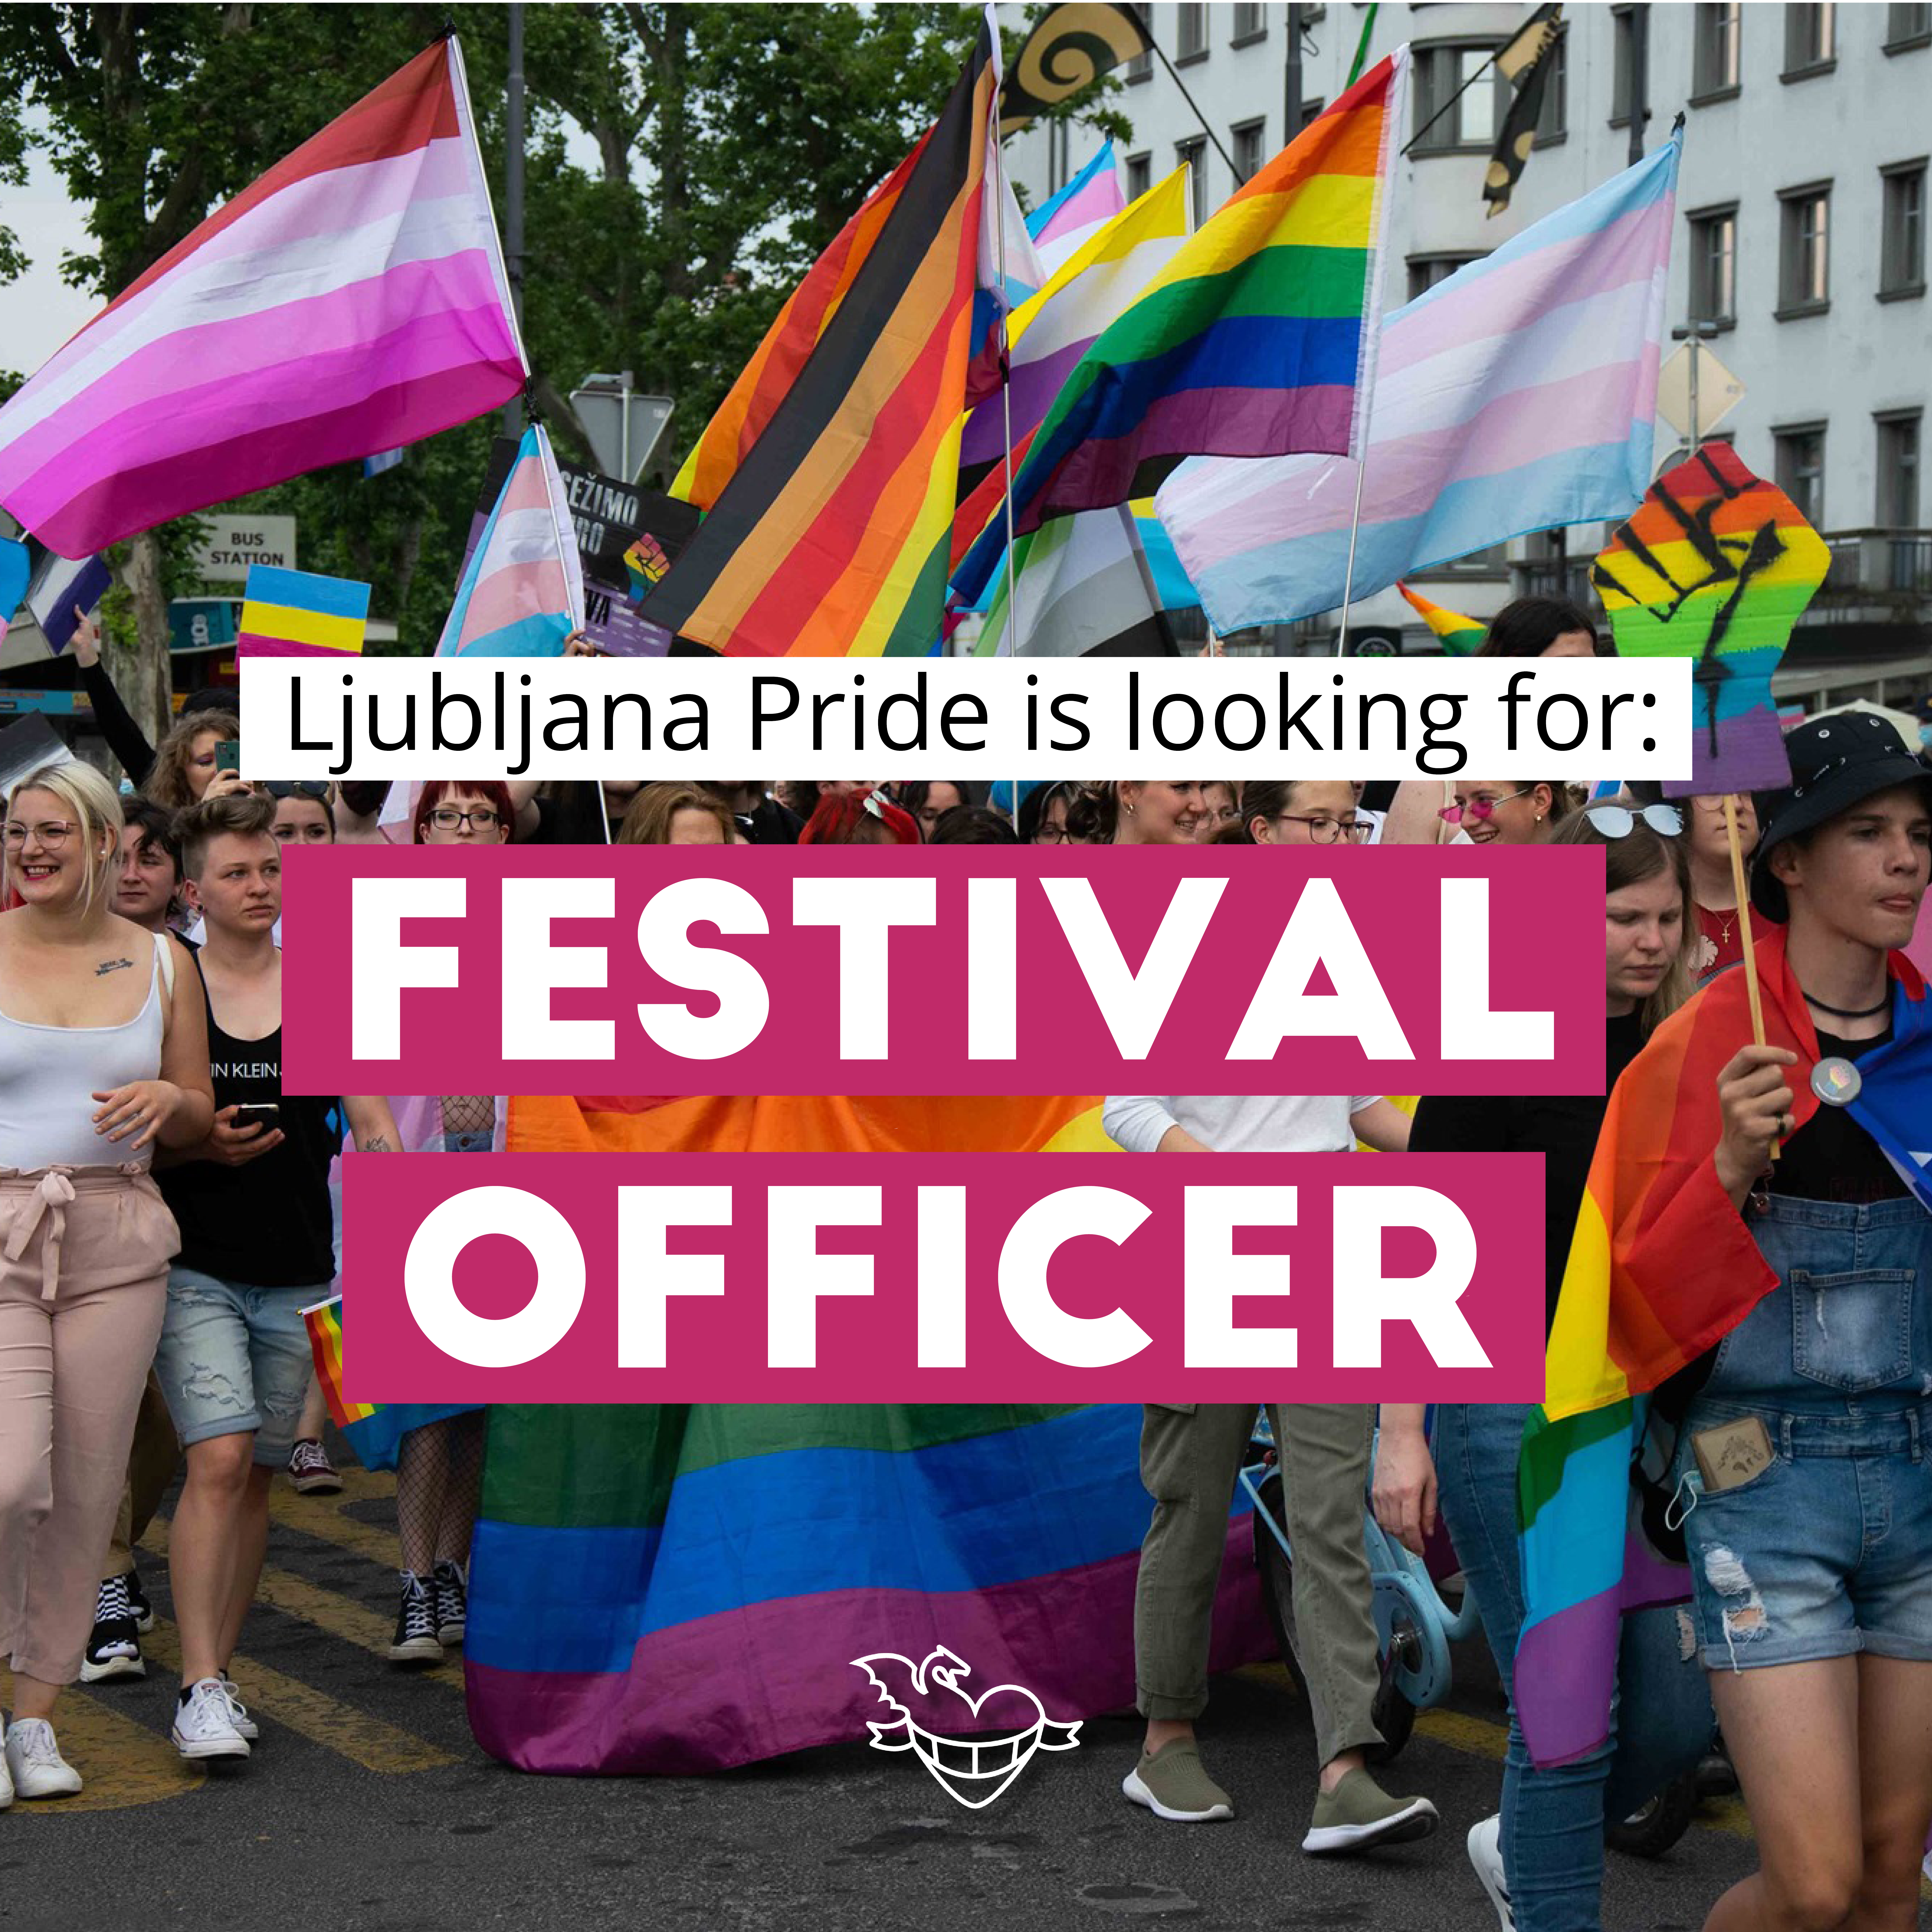 One year ESC volunteering opportunity at Ljubljana Pride: Festival Officer